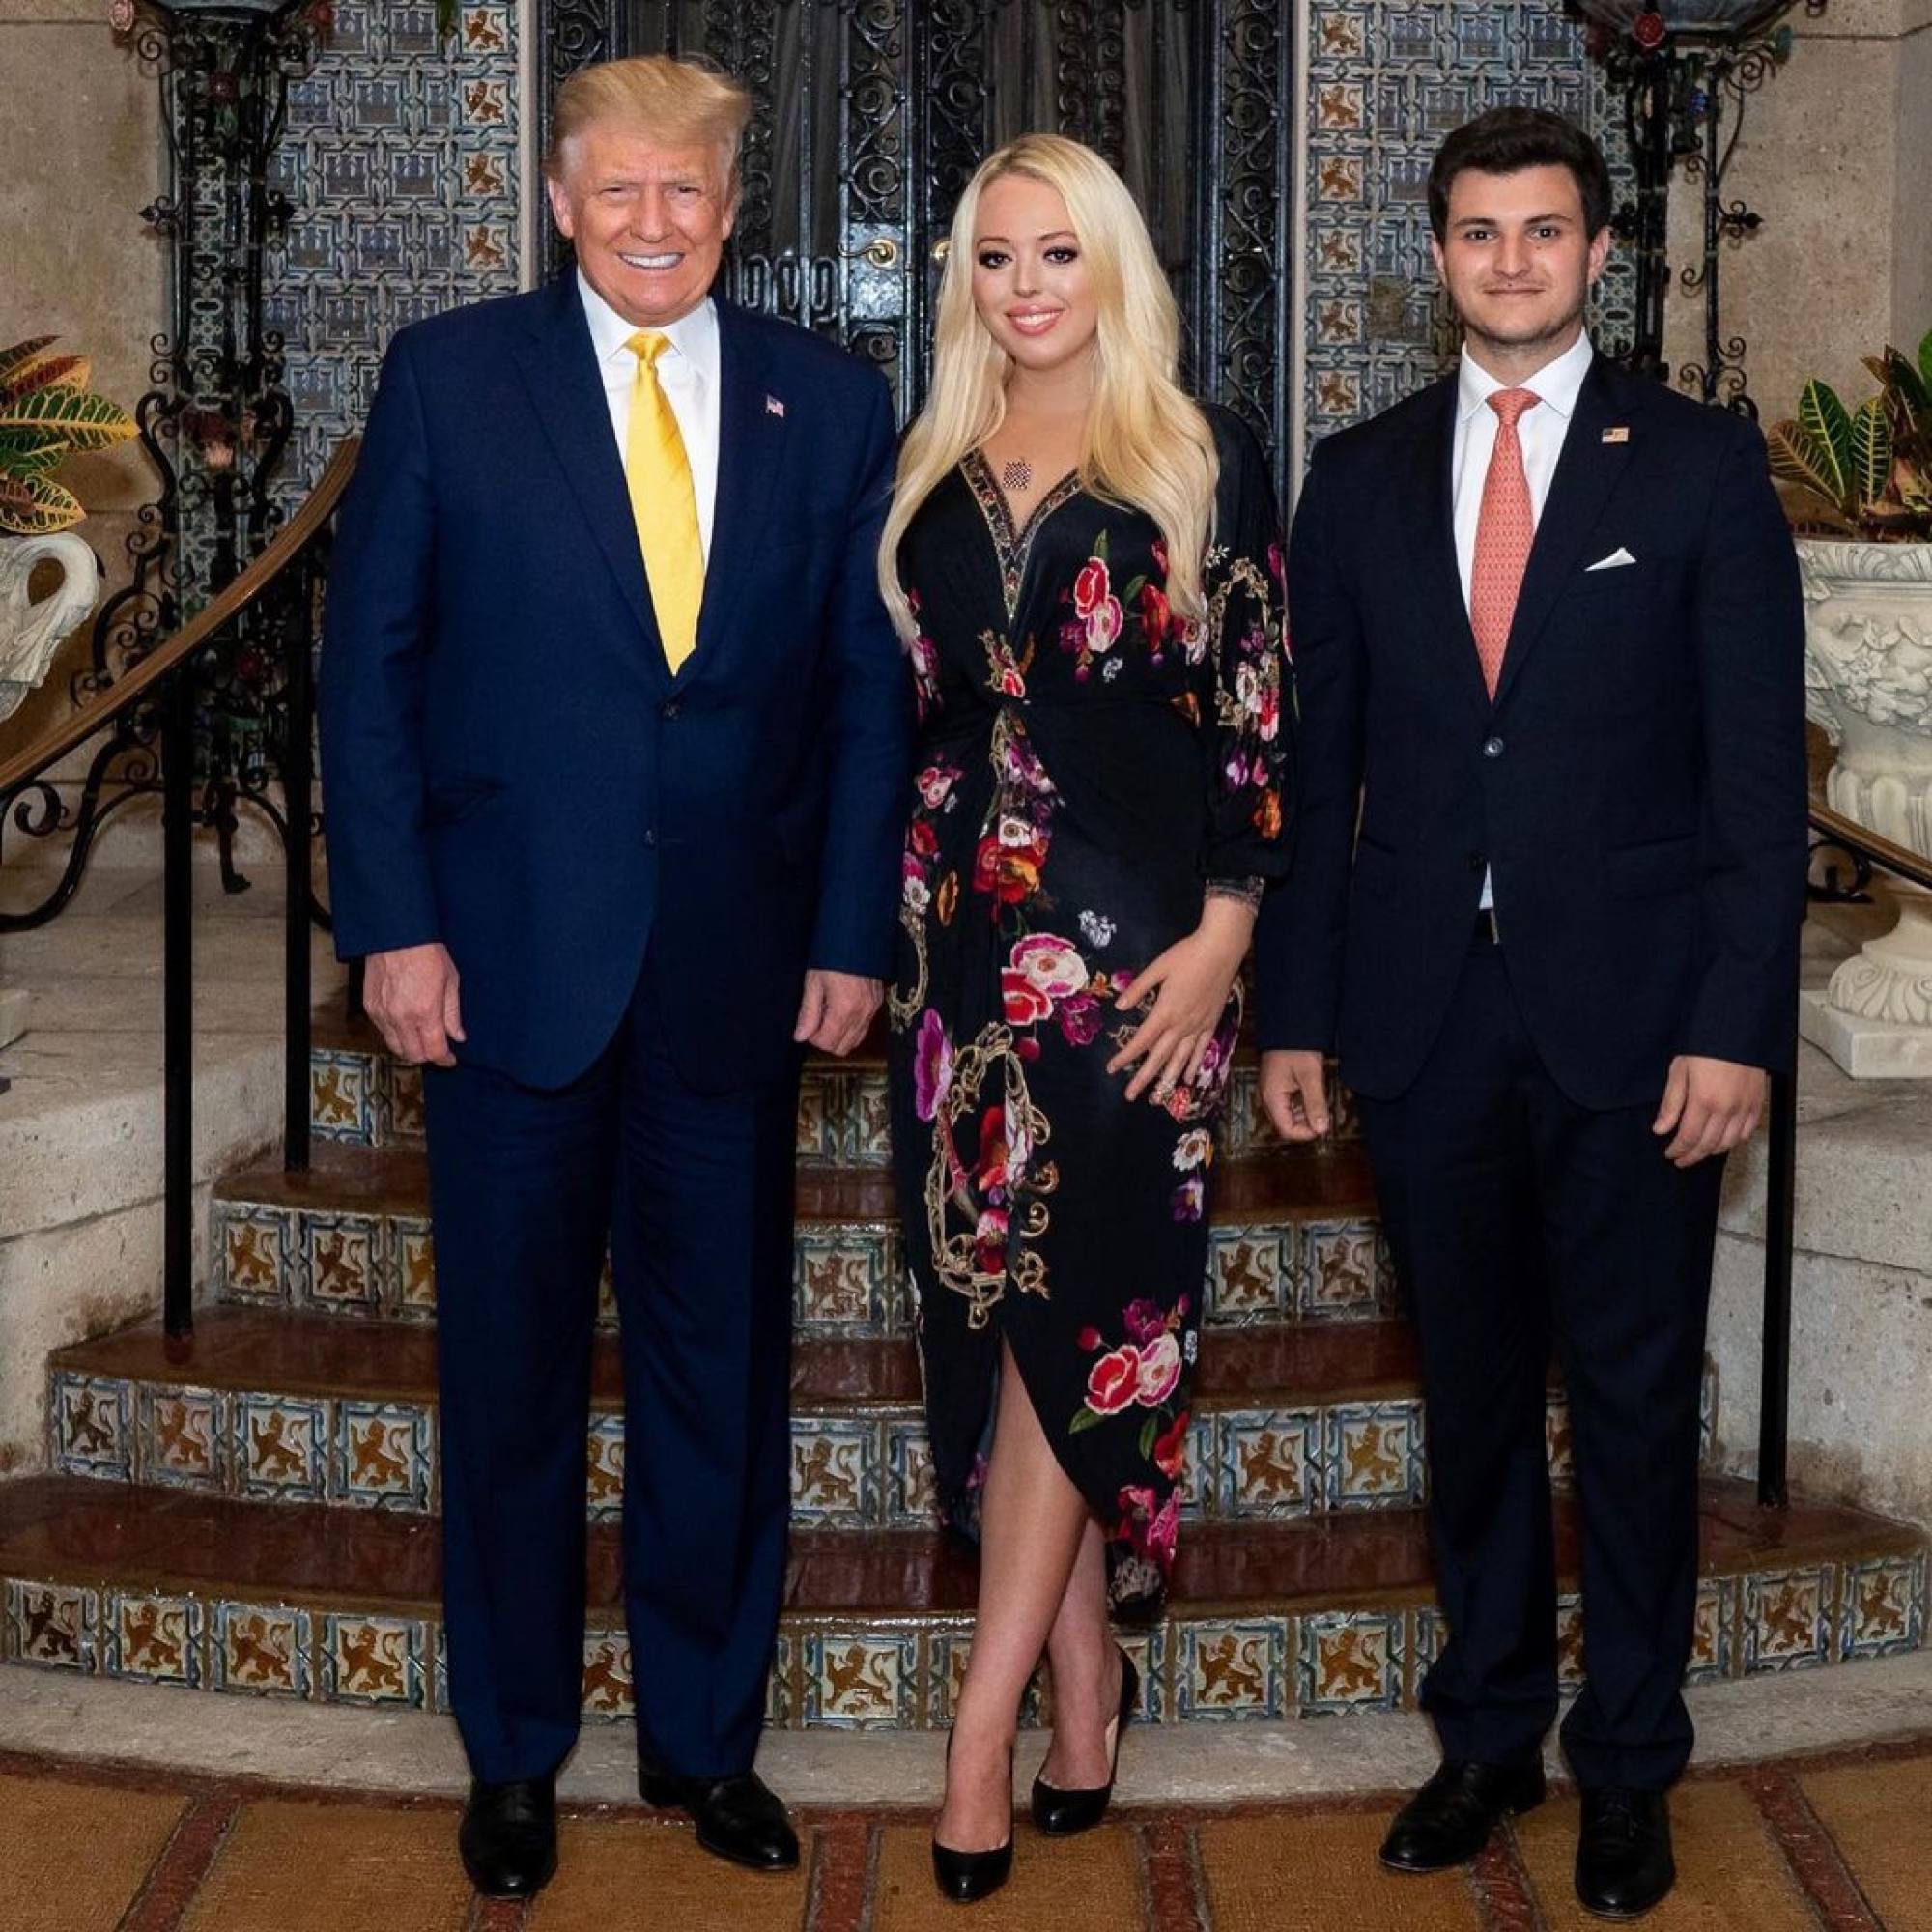 Tiffany Trump and Michael Boulos with Tiffany’s father, Donald Trump. Photo: @tiffanytrump/Instagram